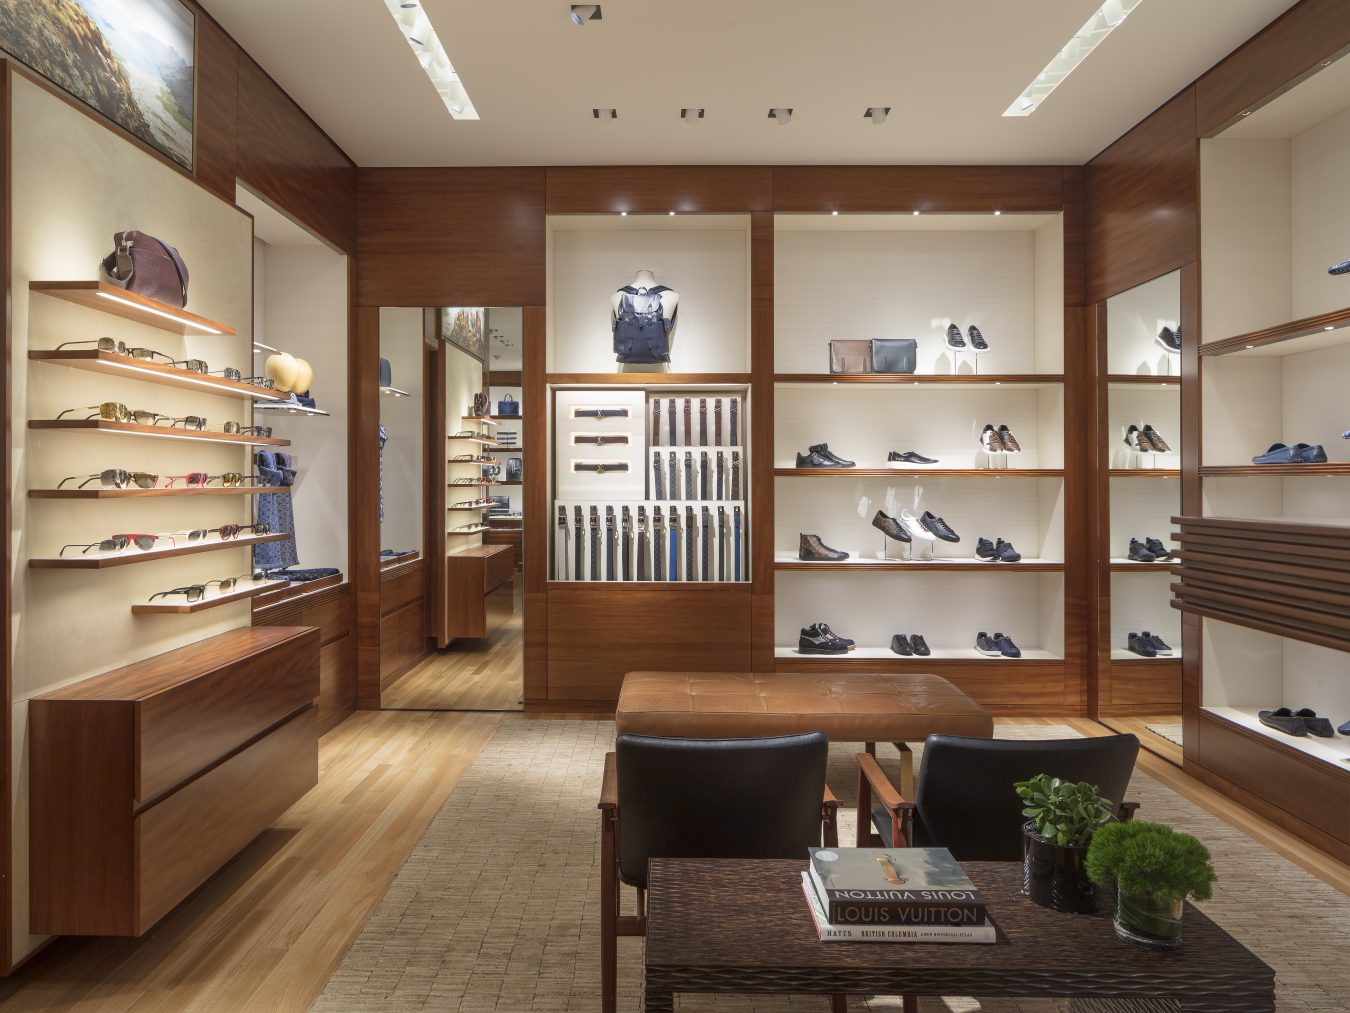 Louis Vuitton men's store opens in Holt Renfrew Vancouver